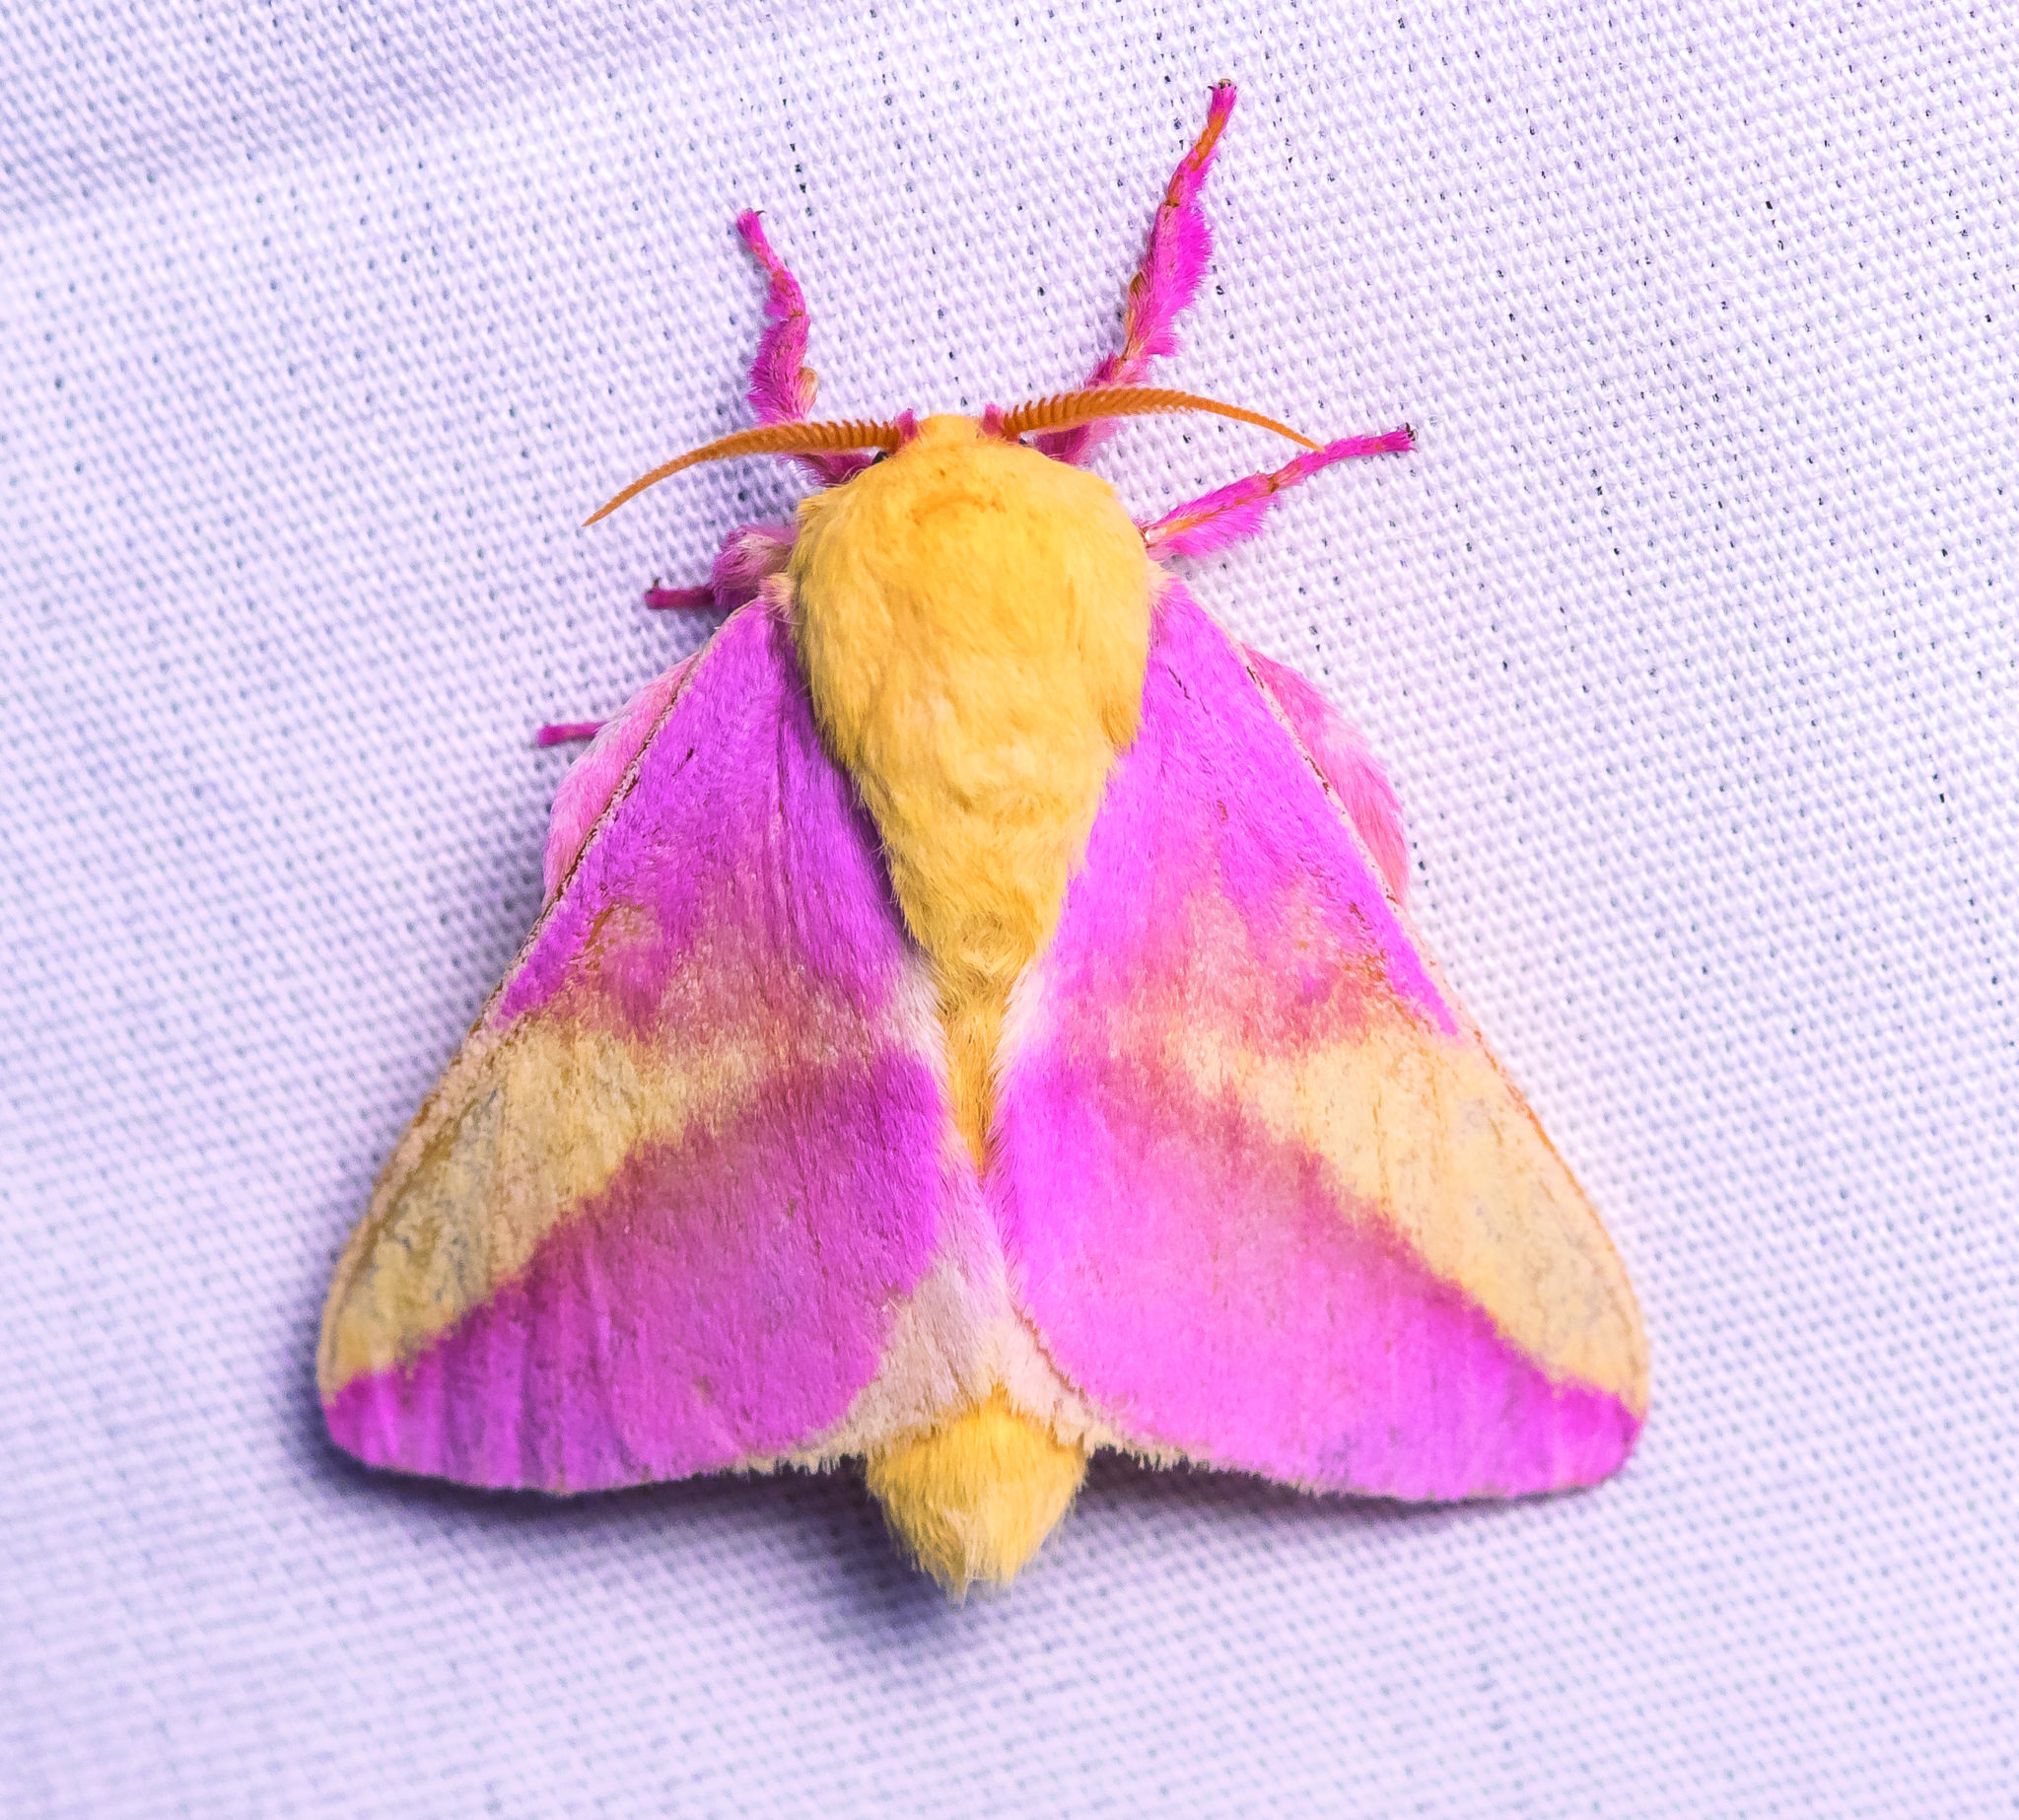 https://waltermagazine.com/wp-content/uploads/2022/06/Rosy-Maple-Moth-on-moth-sheet-scaled.jpg